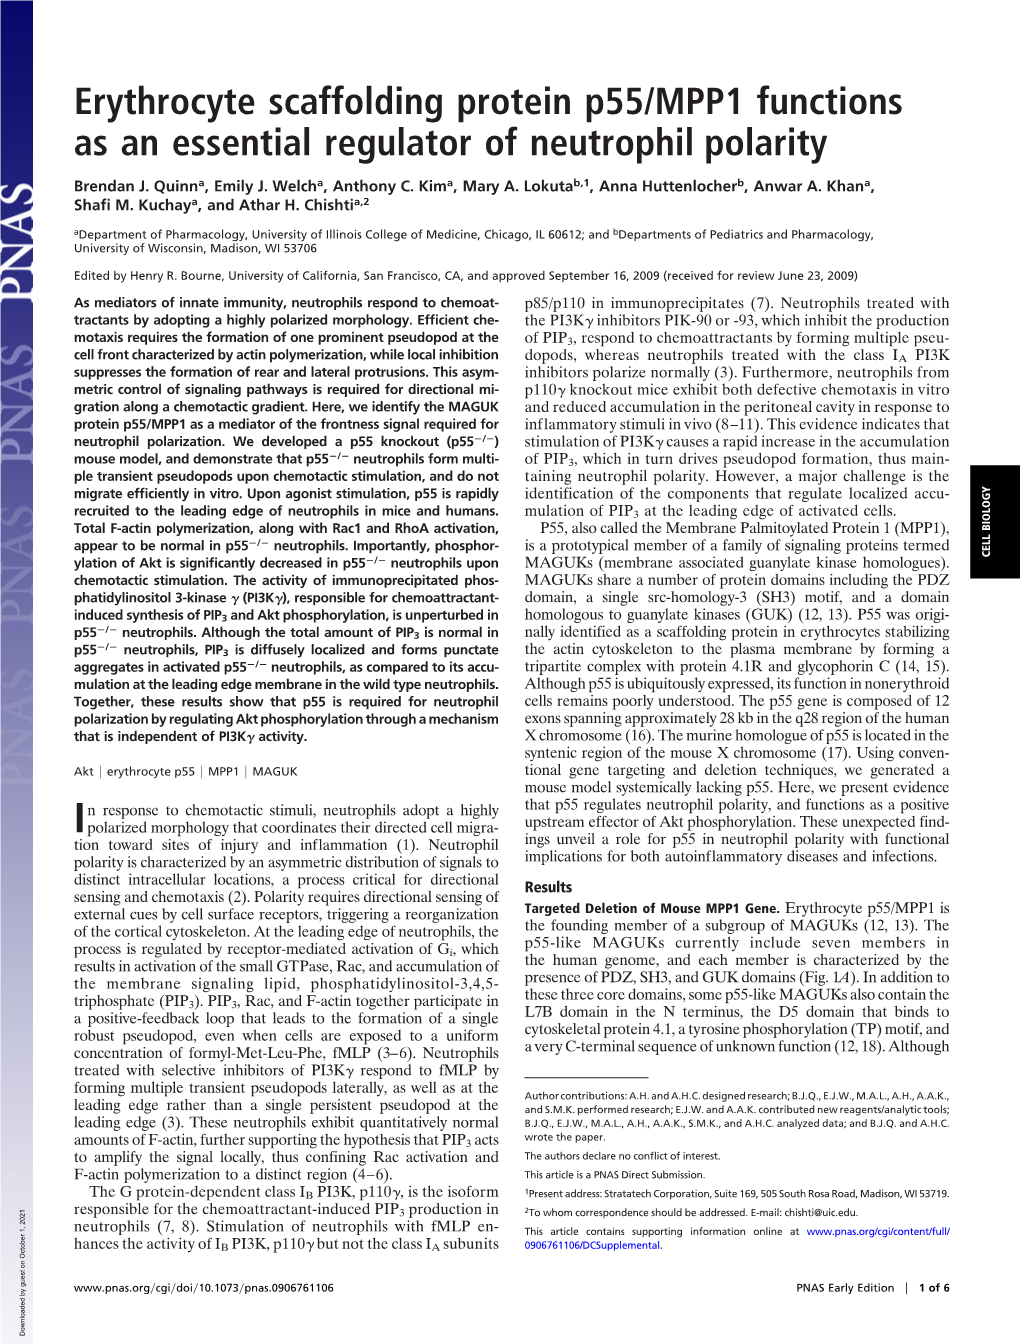 Erythrocyte Scaffolding Protein P55/MPP1 Functions As an Essential Regulator of Neutrophil Polarity